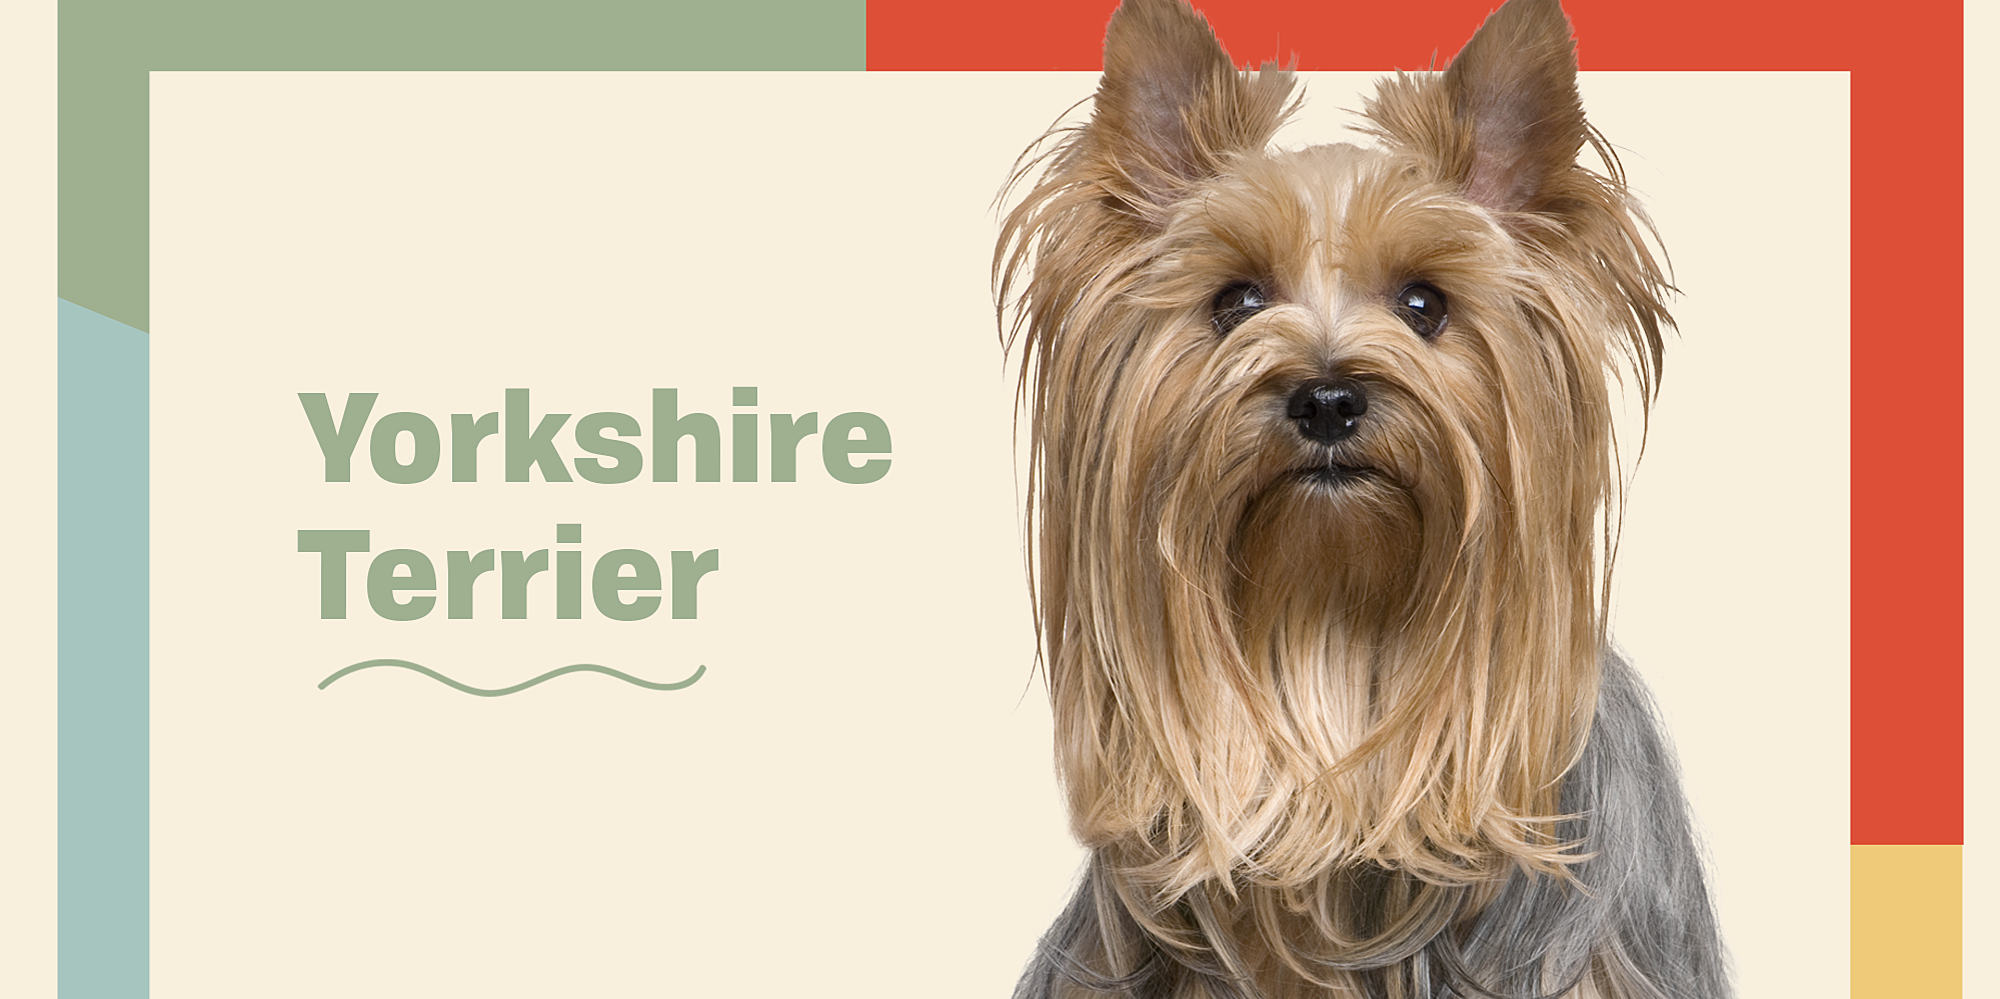 Yorkshire Terrier (Yorkie)